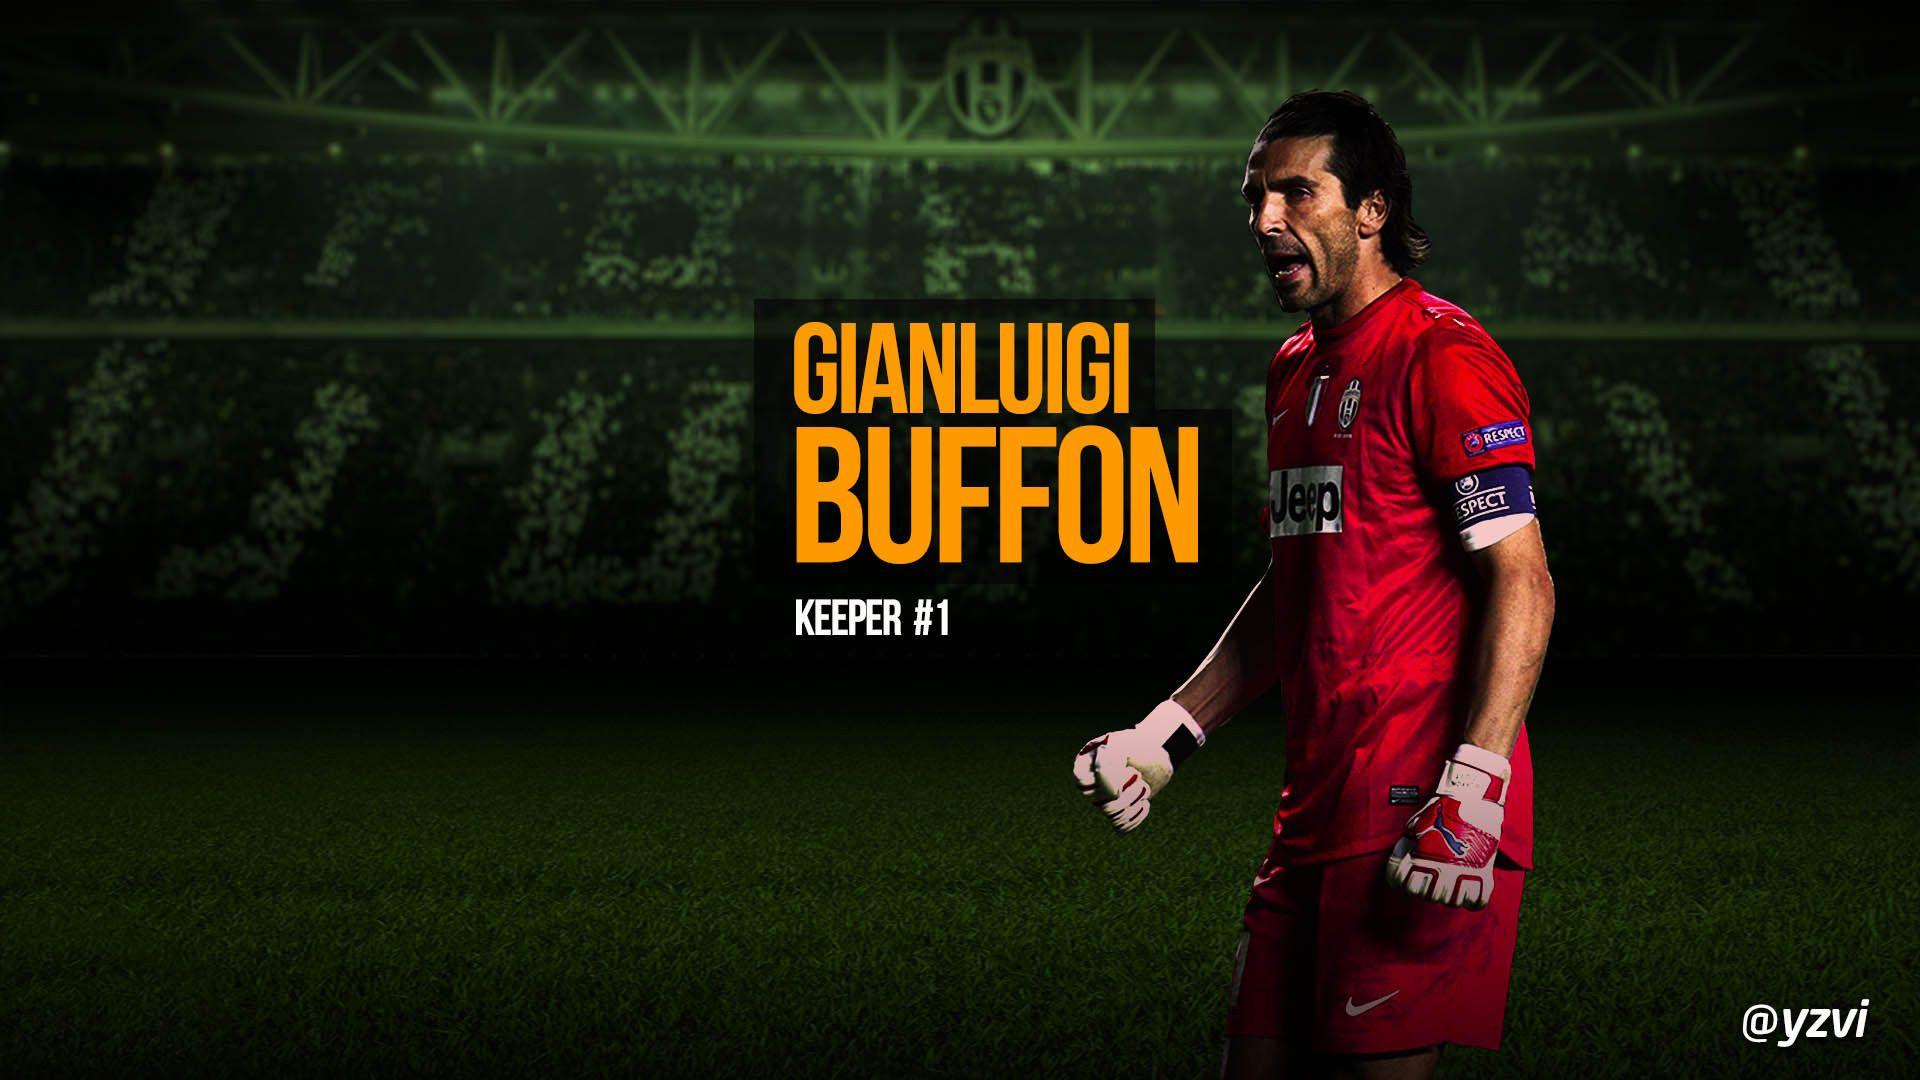 The goalkeeper of Juventus Gianluigi Buffon is like a wall